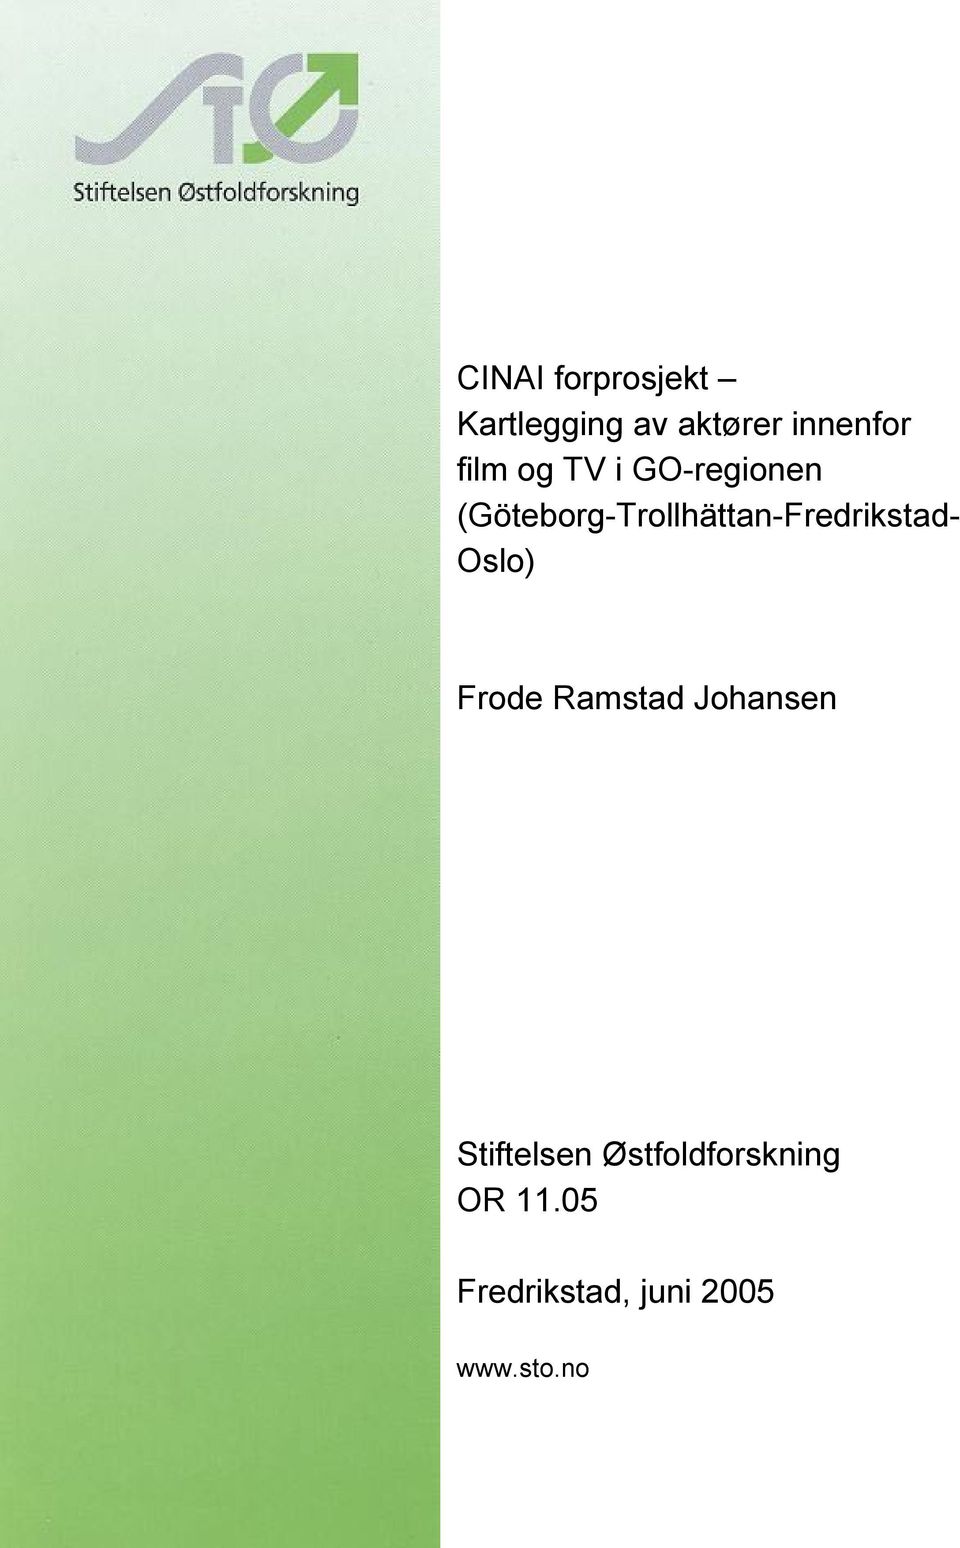 (Göteborg-Trollhättan-Fredrikstad- Oslo) Frode